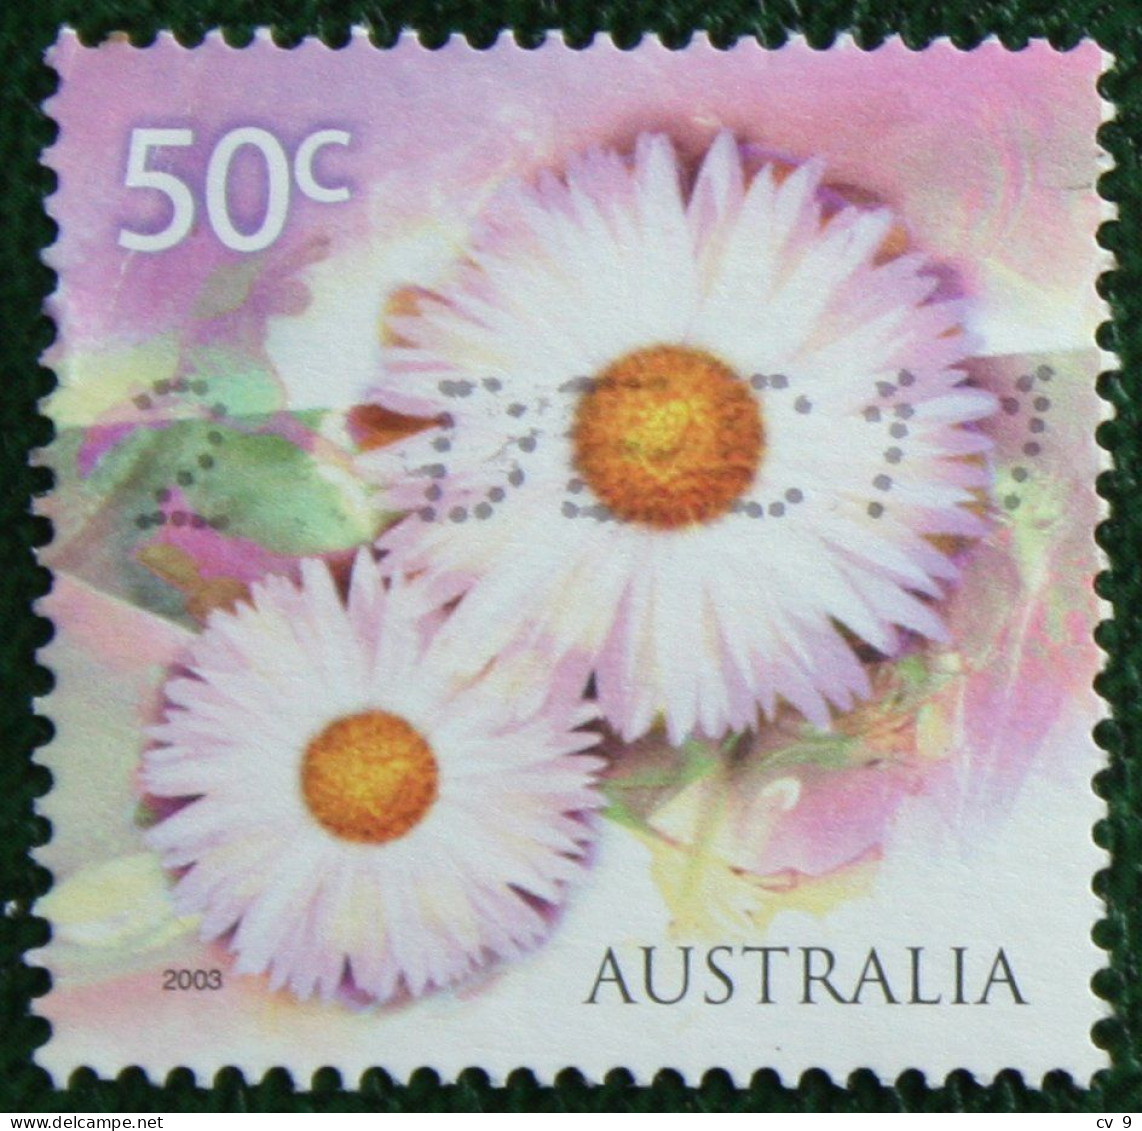 Greeting Stamps Flower Fleur 2003 Mi 2190 Used Gebruikt Oblitere Australia Australien Australie - Used Stamps